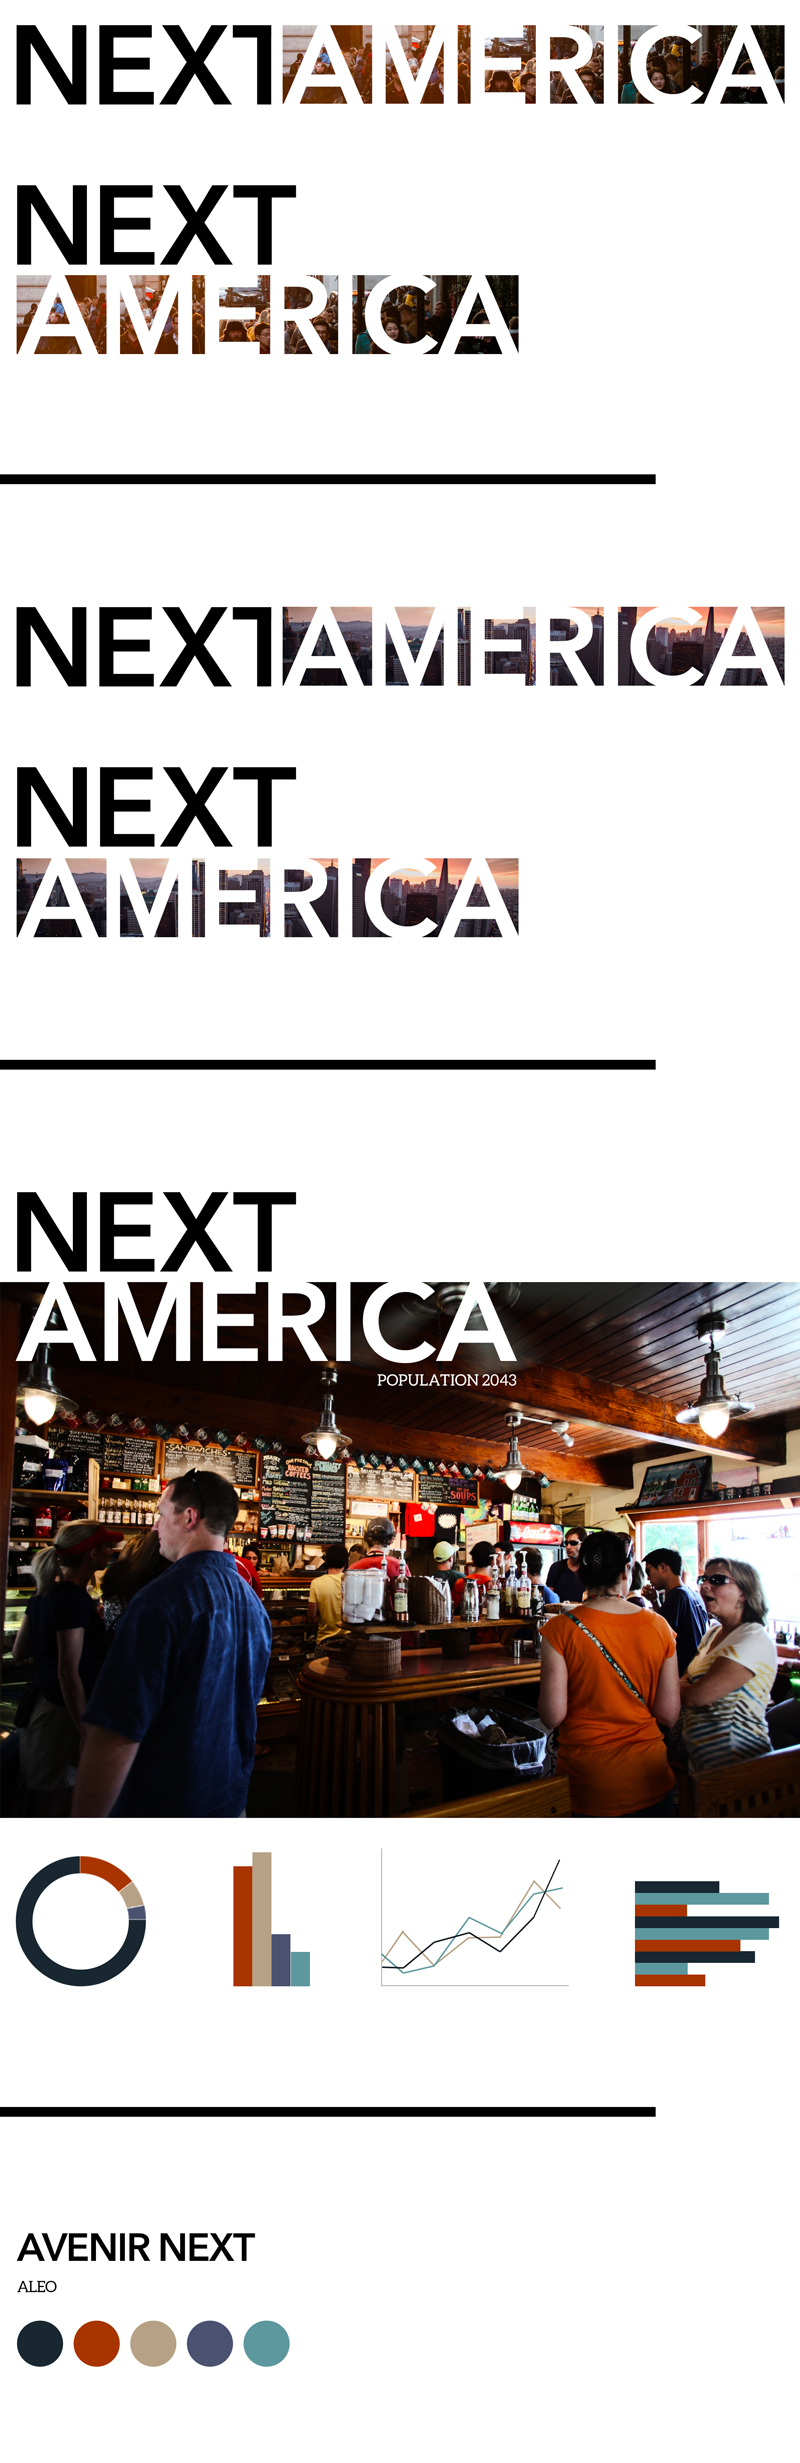 The Next America brand exploration